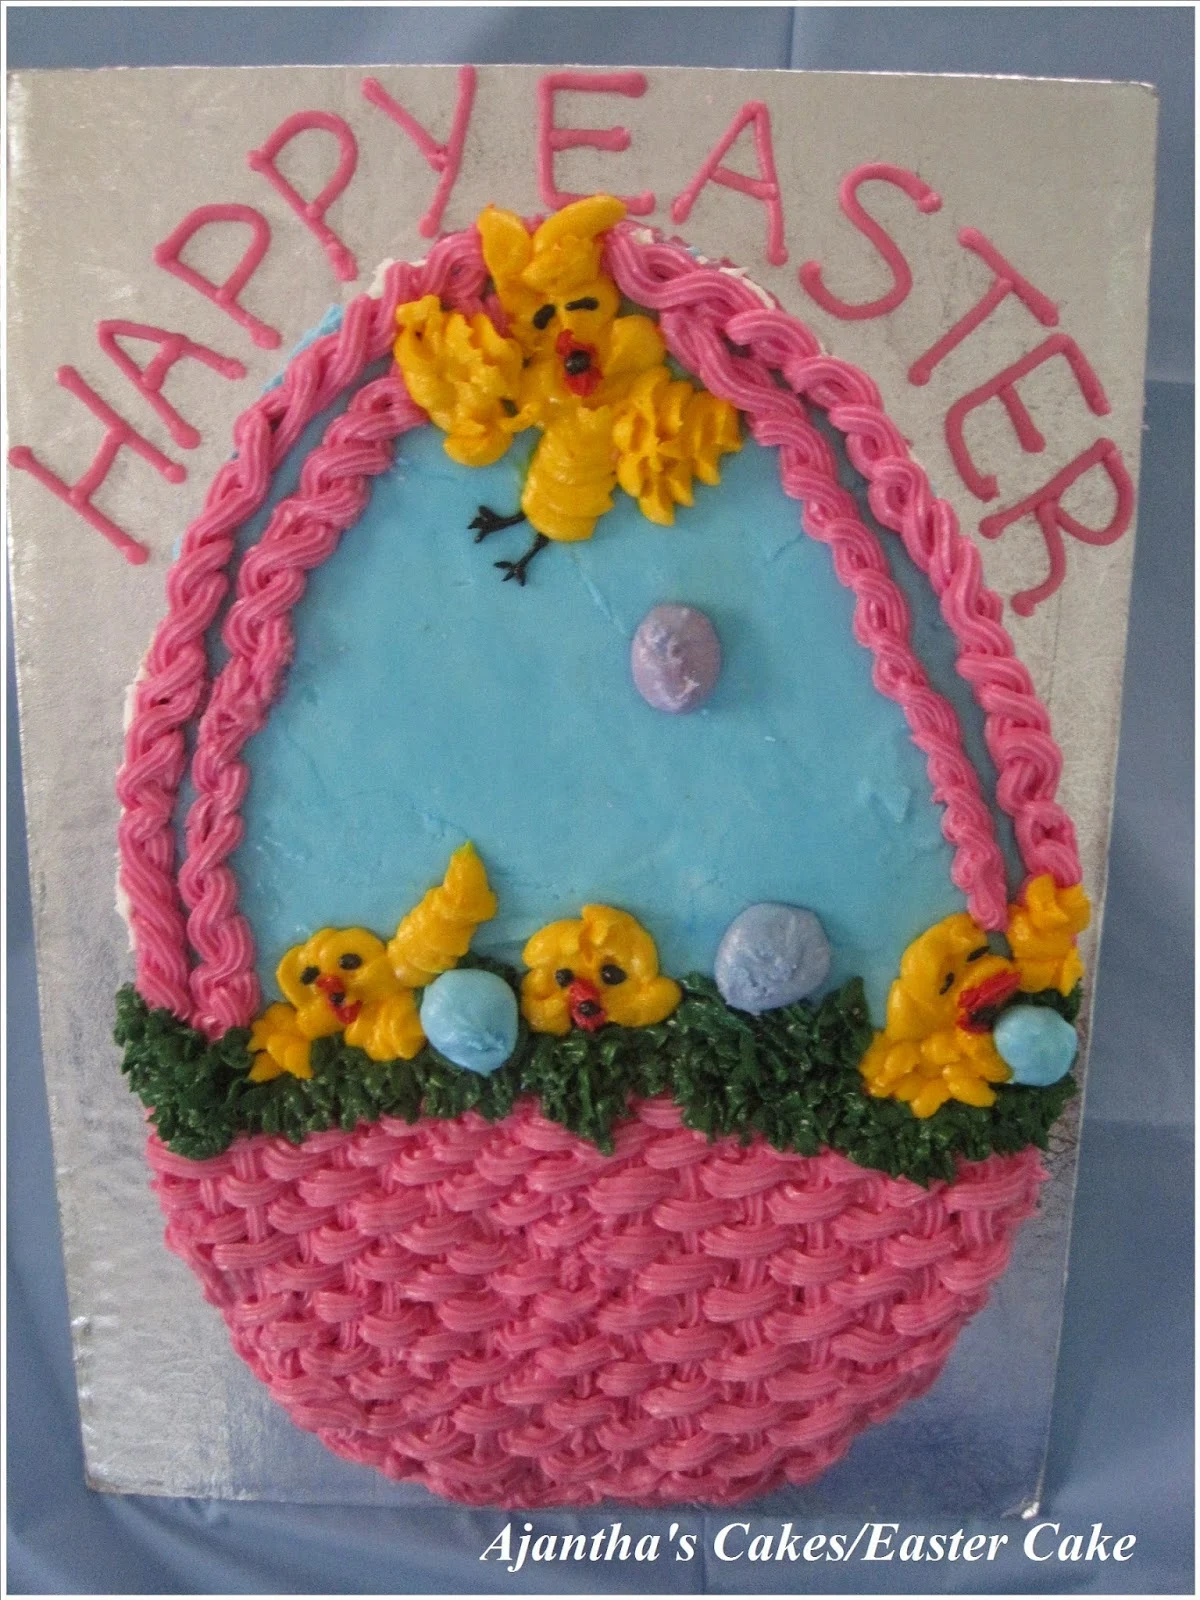 Ajantha Cakes/Easter Cake